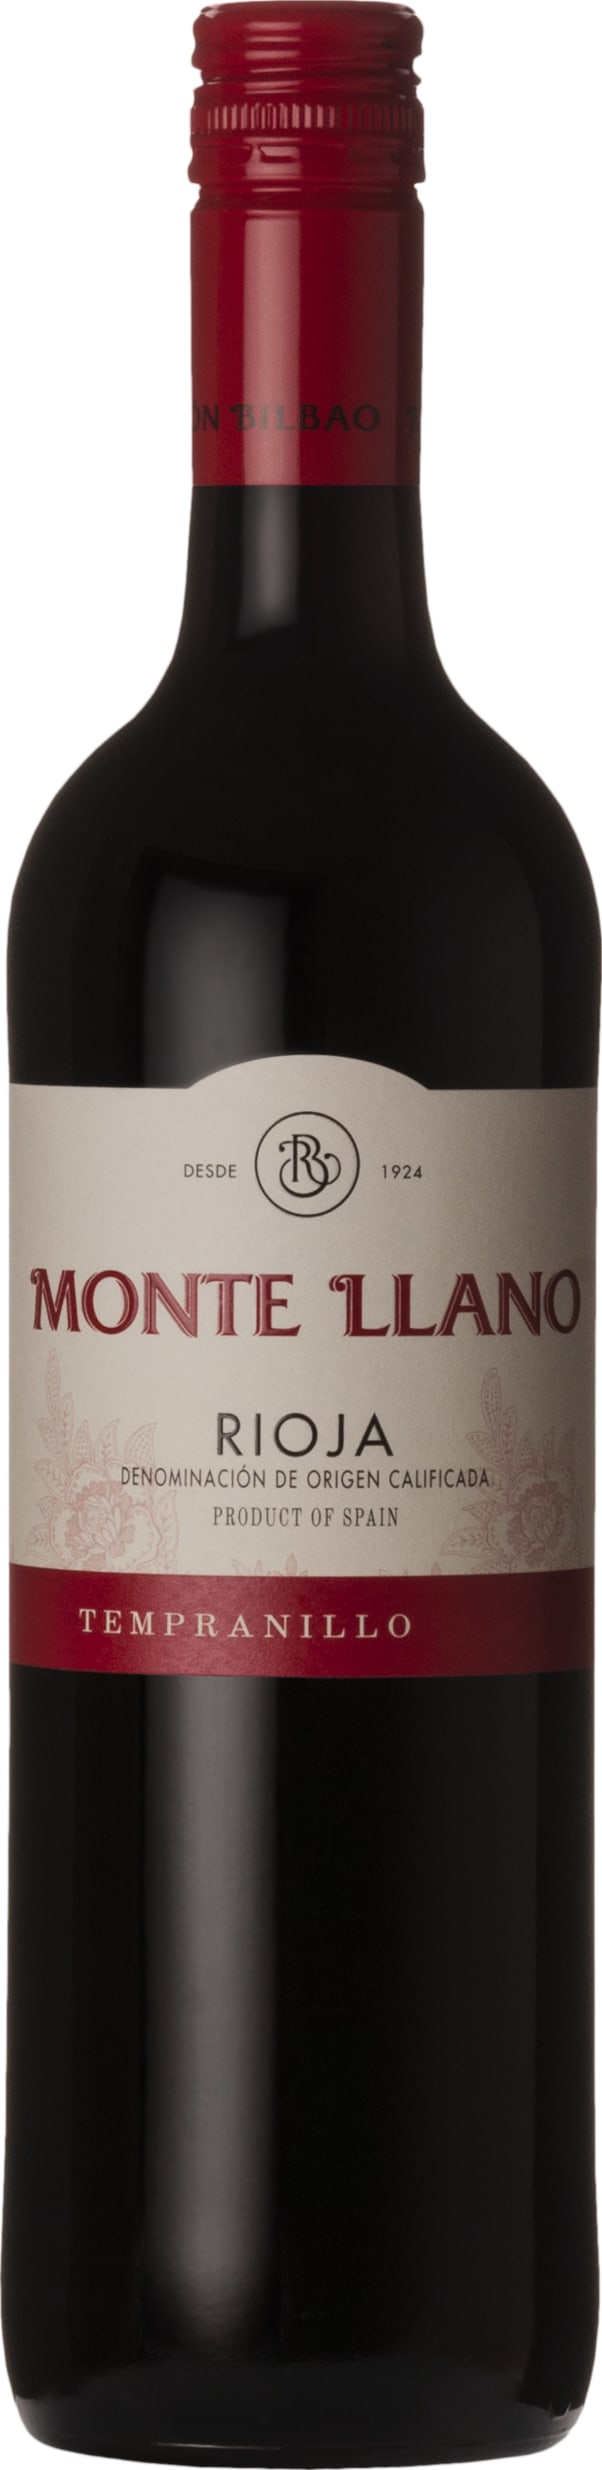 Ramon Bilbao Monte Llano Tinto Rioja 2021 75cl - Buy Ramon Bilbao Wines from GREAT WINES DIRECT wine shop